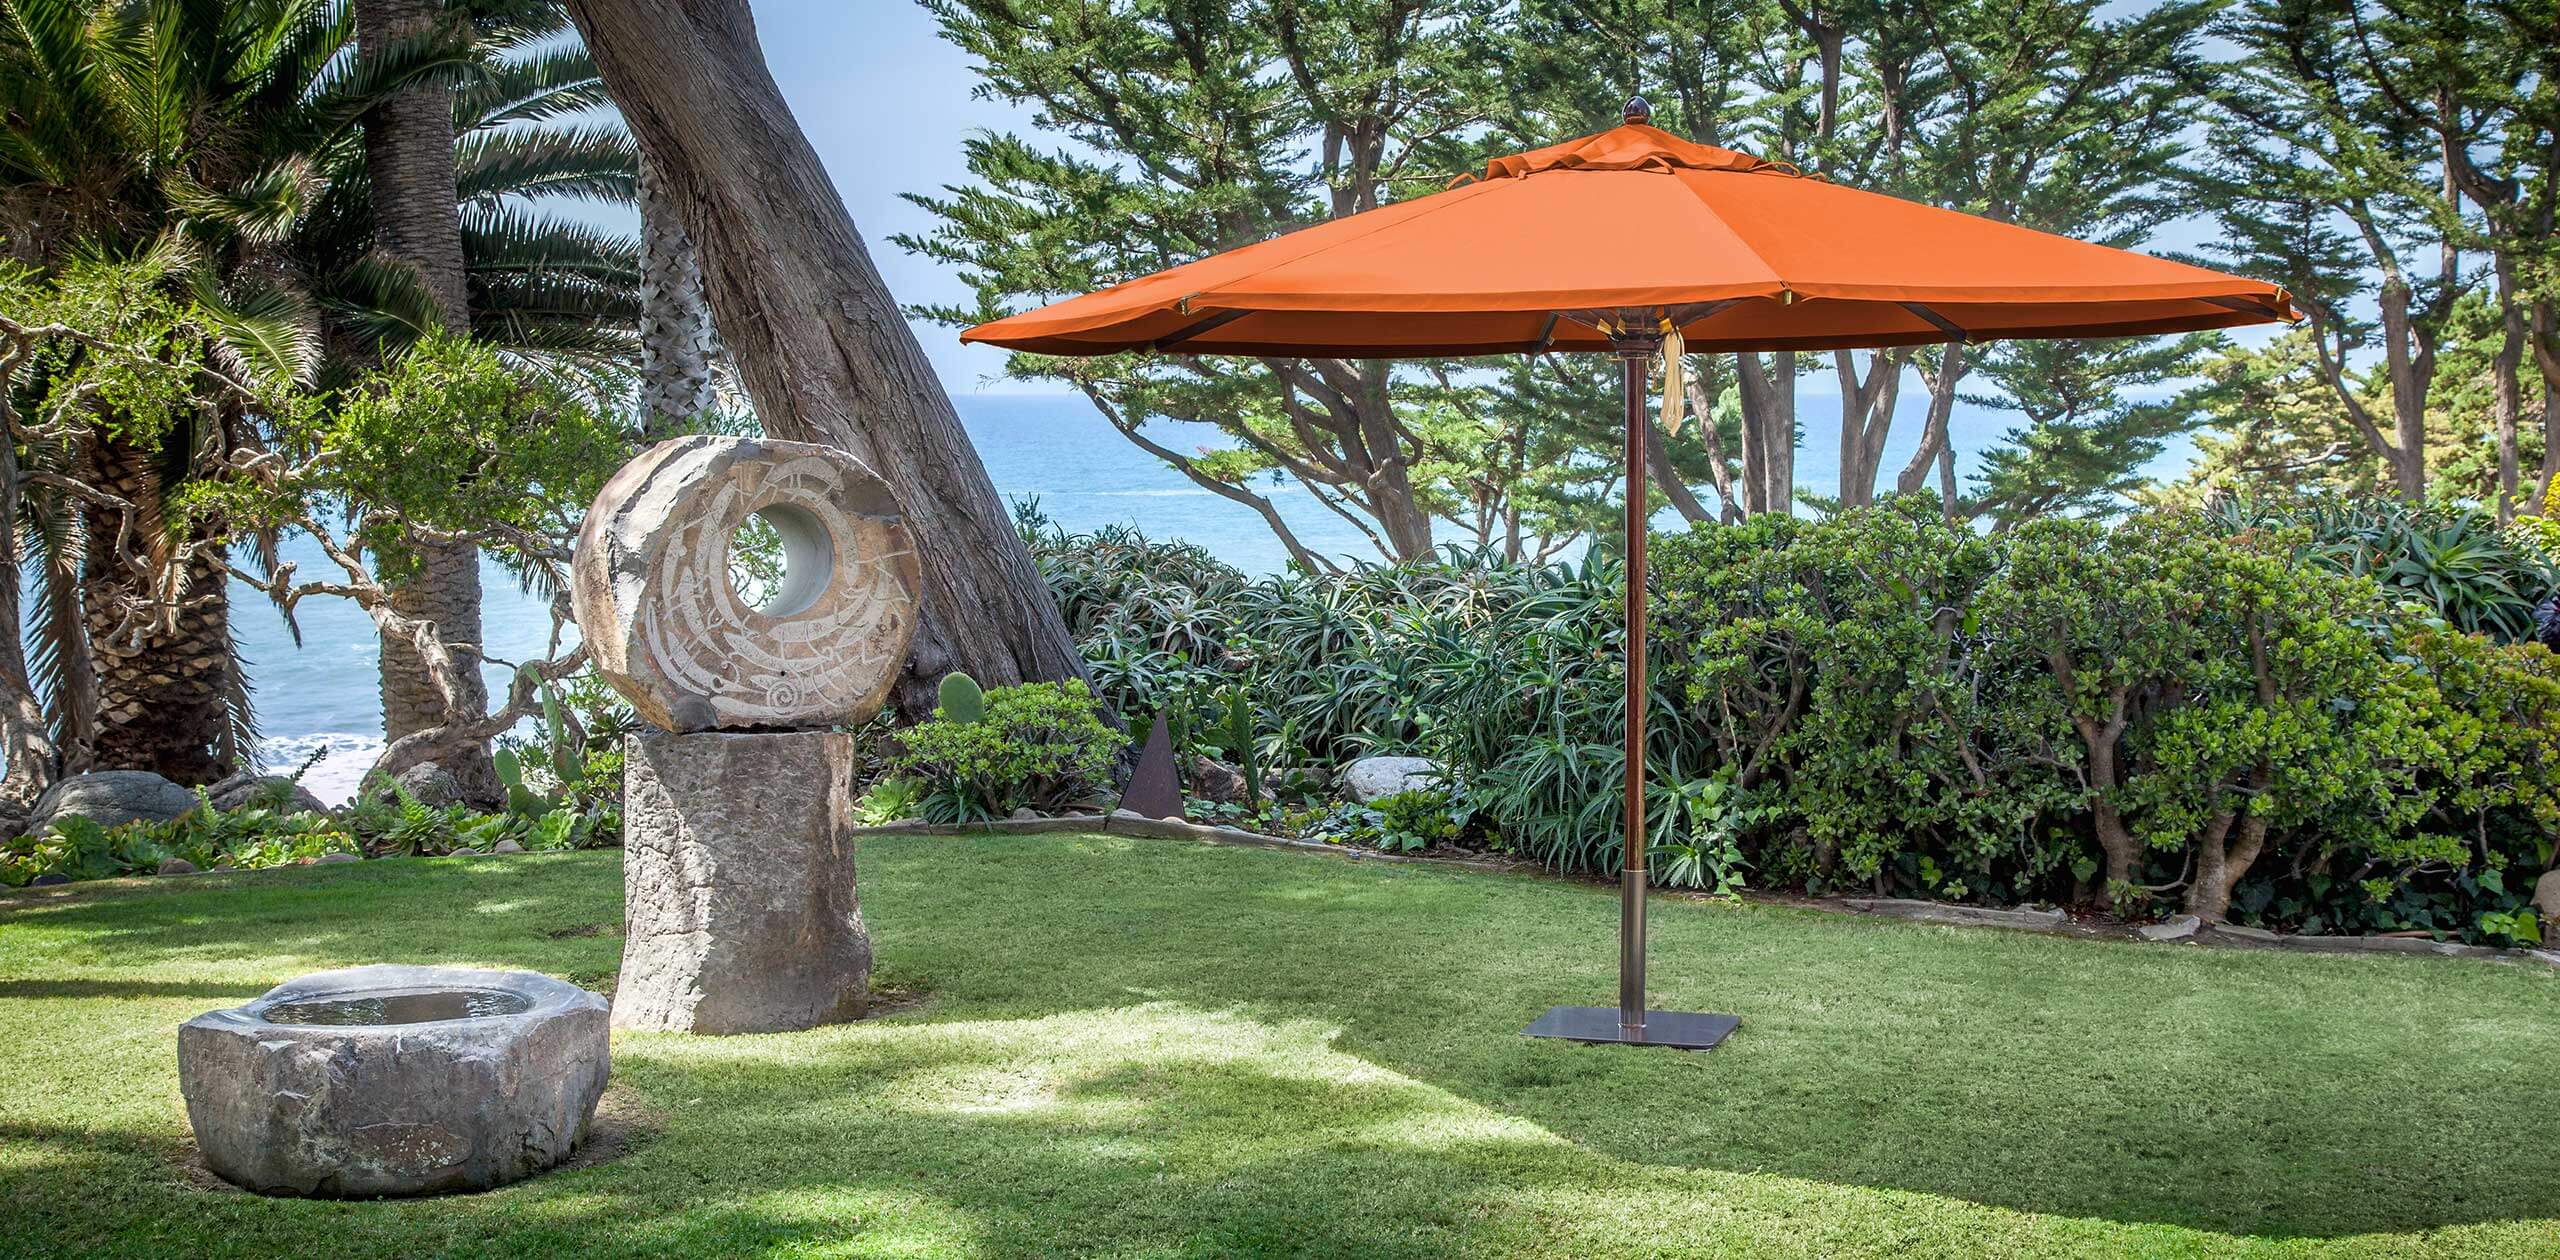 The Santa Barbara Umbrella Image